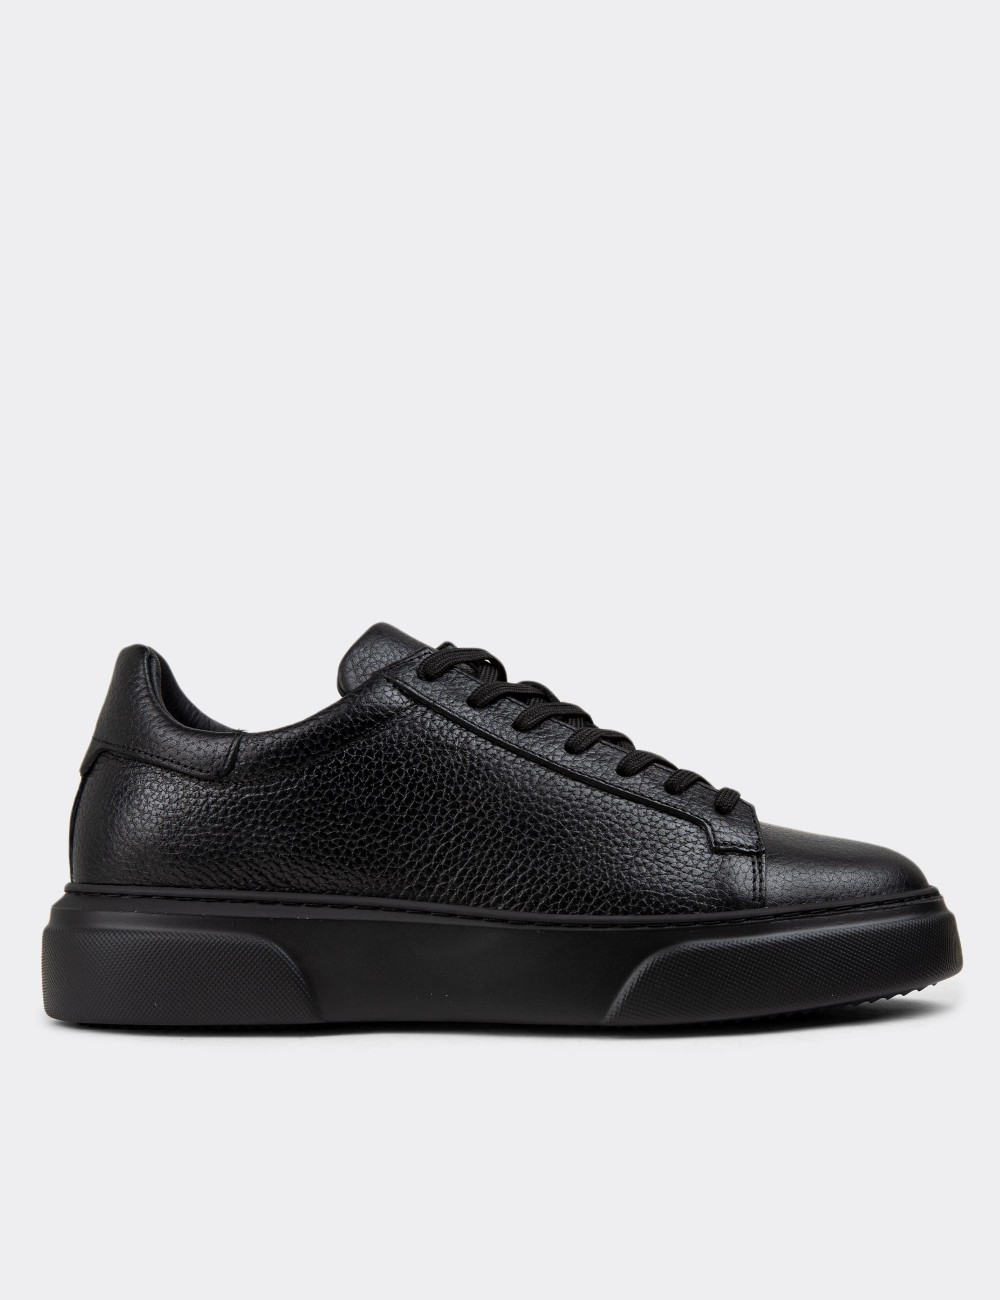 Black Leather Sneakers - M2501MSYHP03